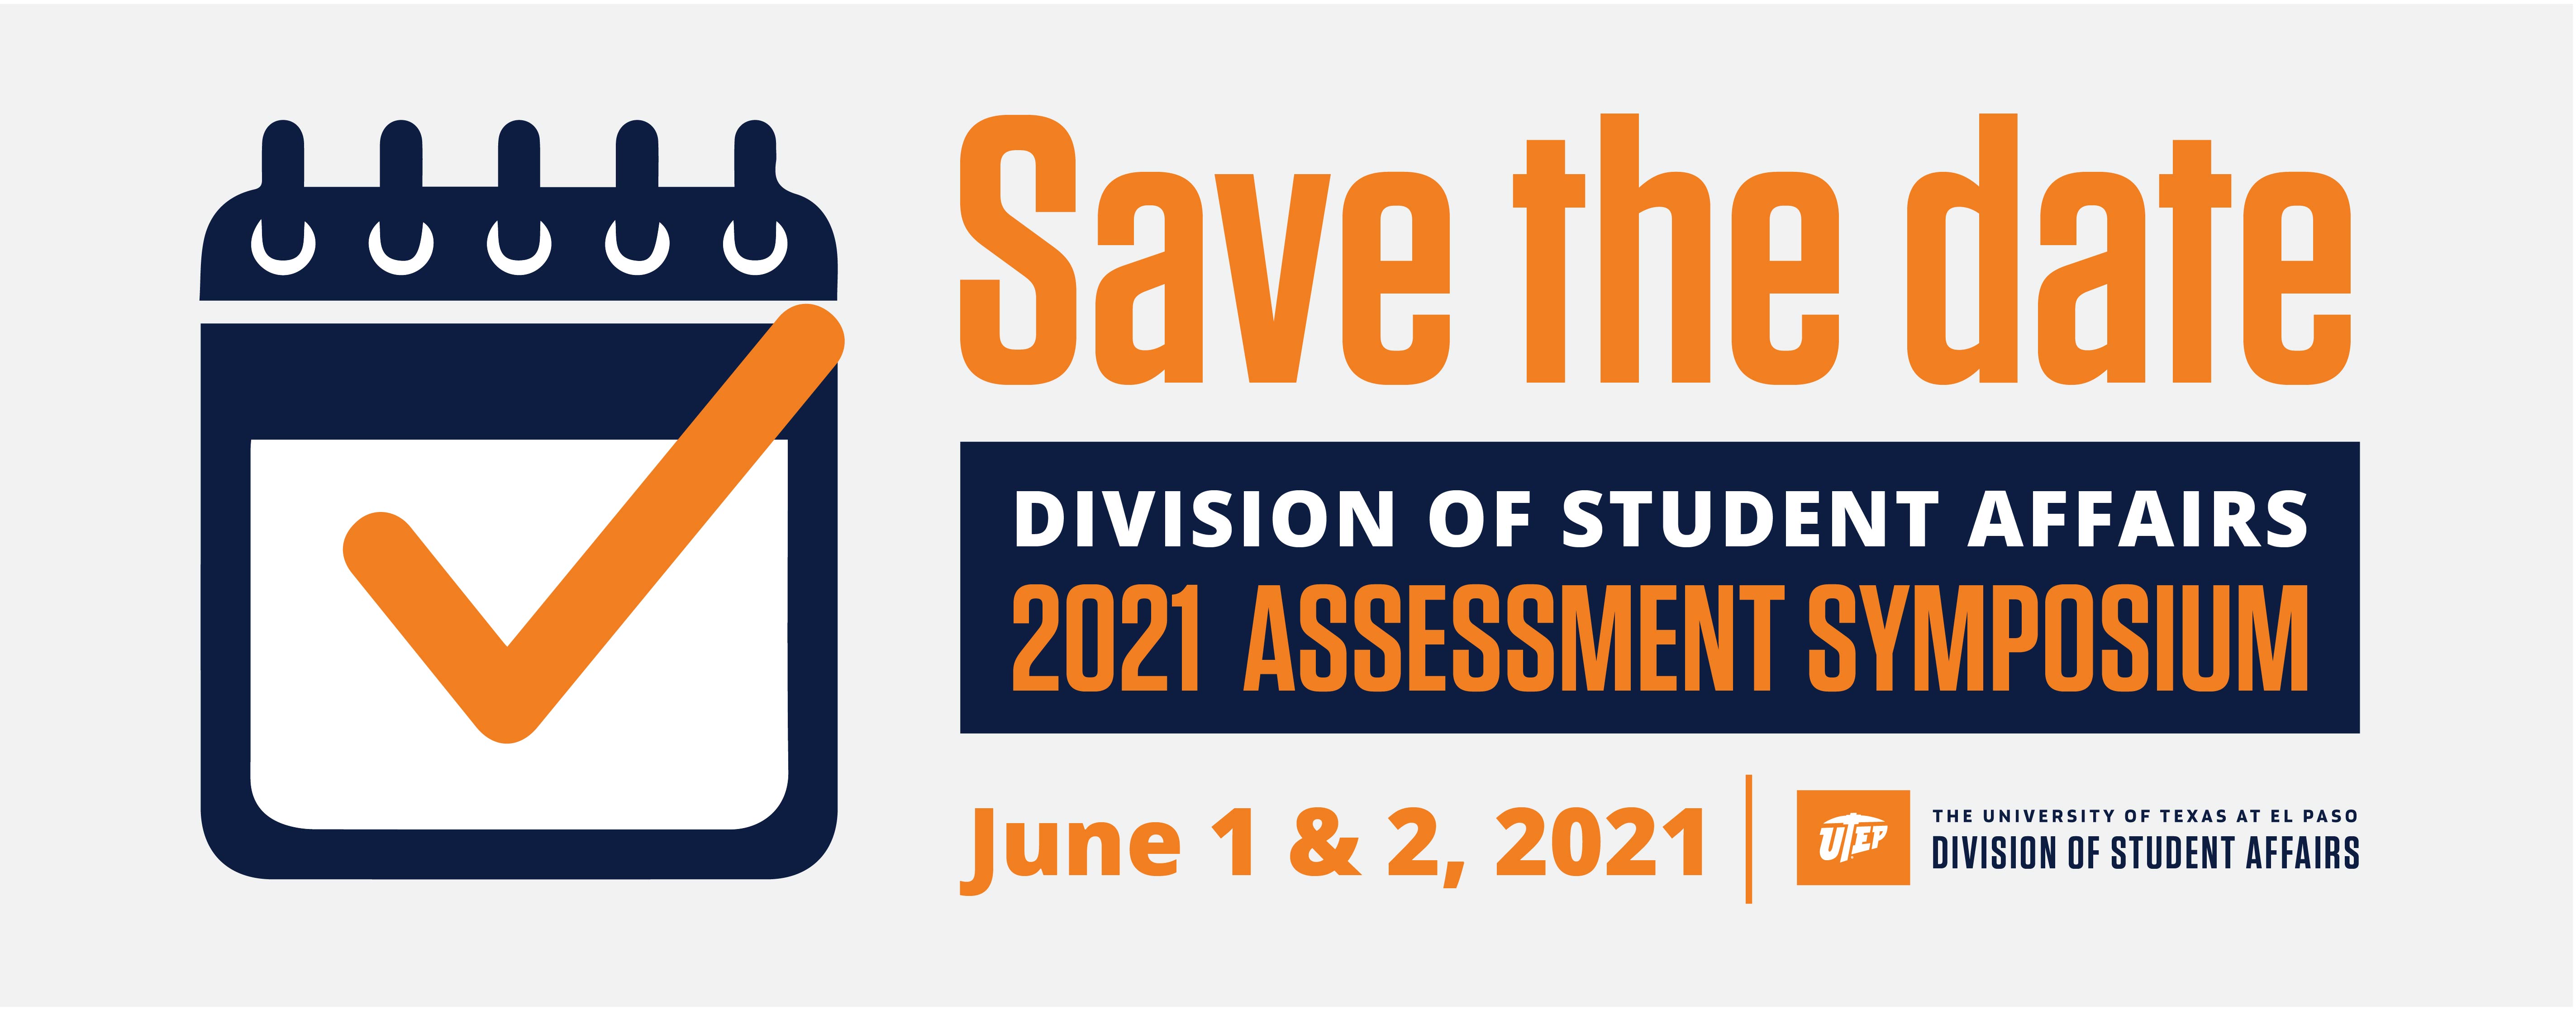 Student Affairs Assessment Symposium-2021 June 1 and 2 2021